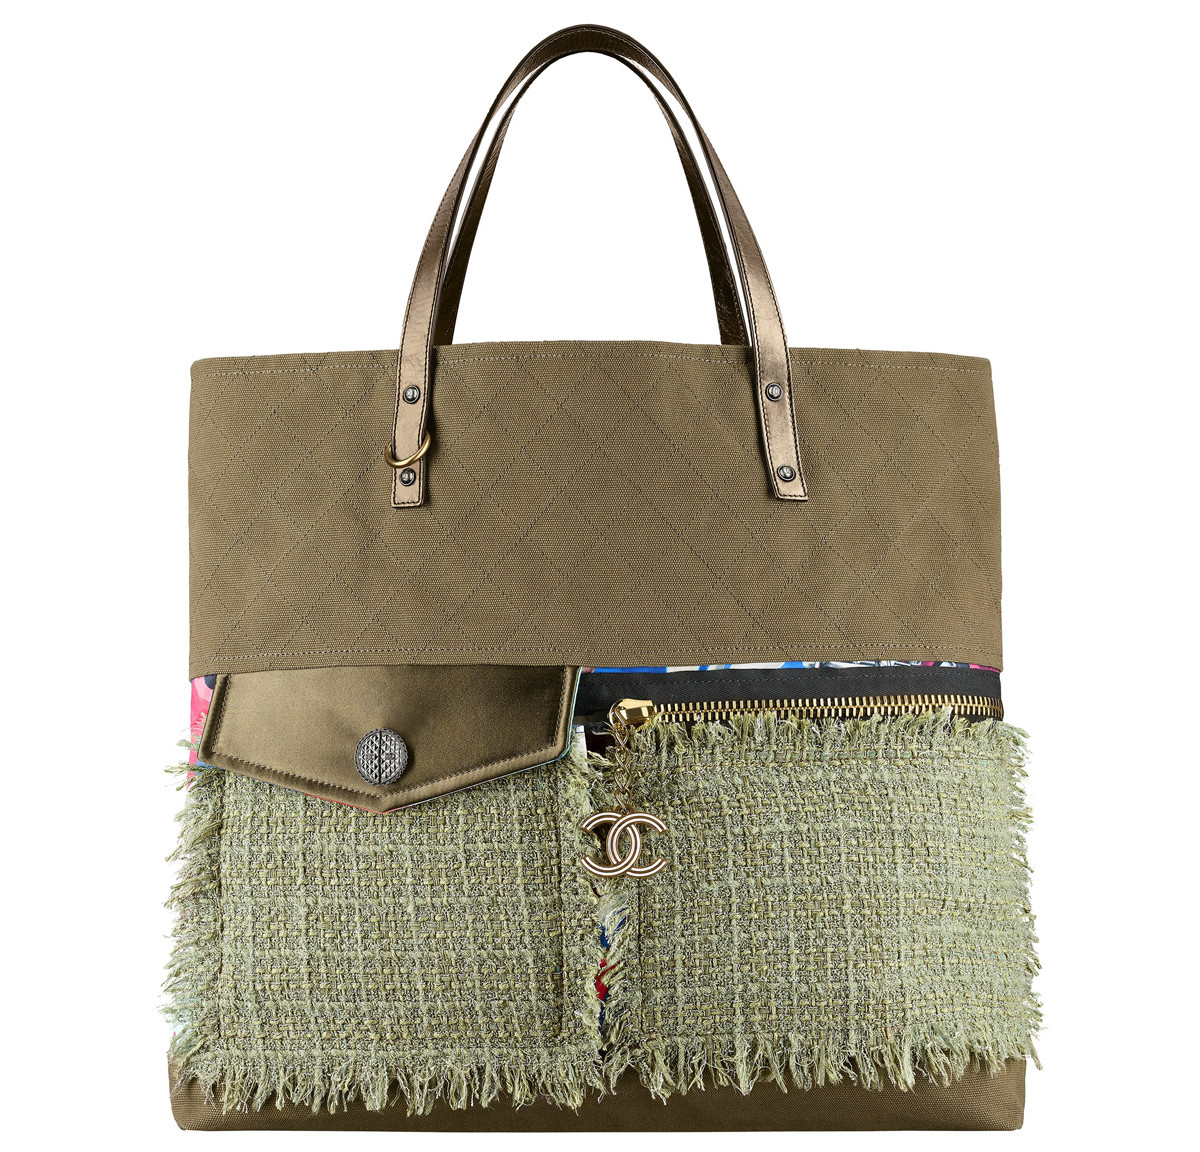 Chanel Cuba Khaki toile and tweed shopping bag